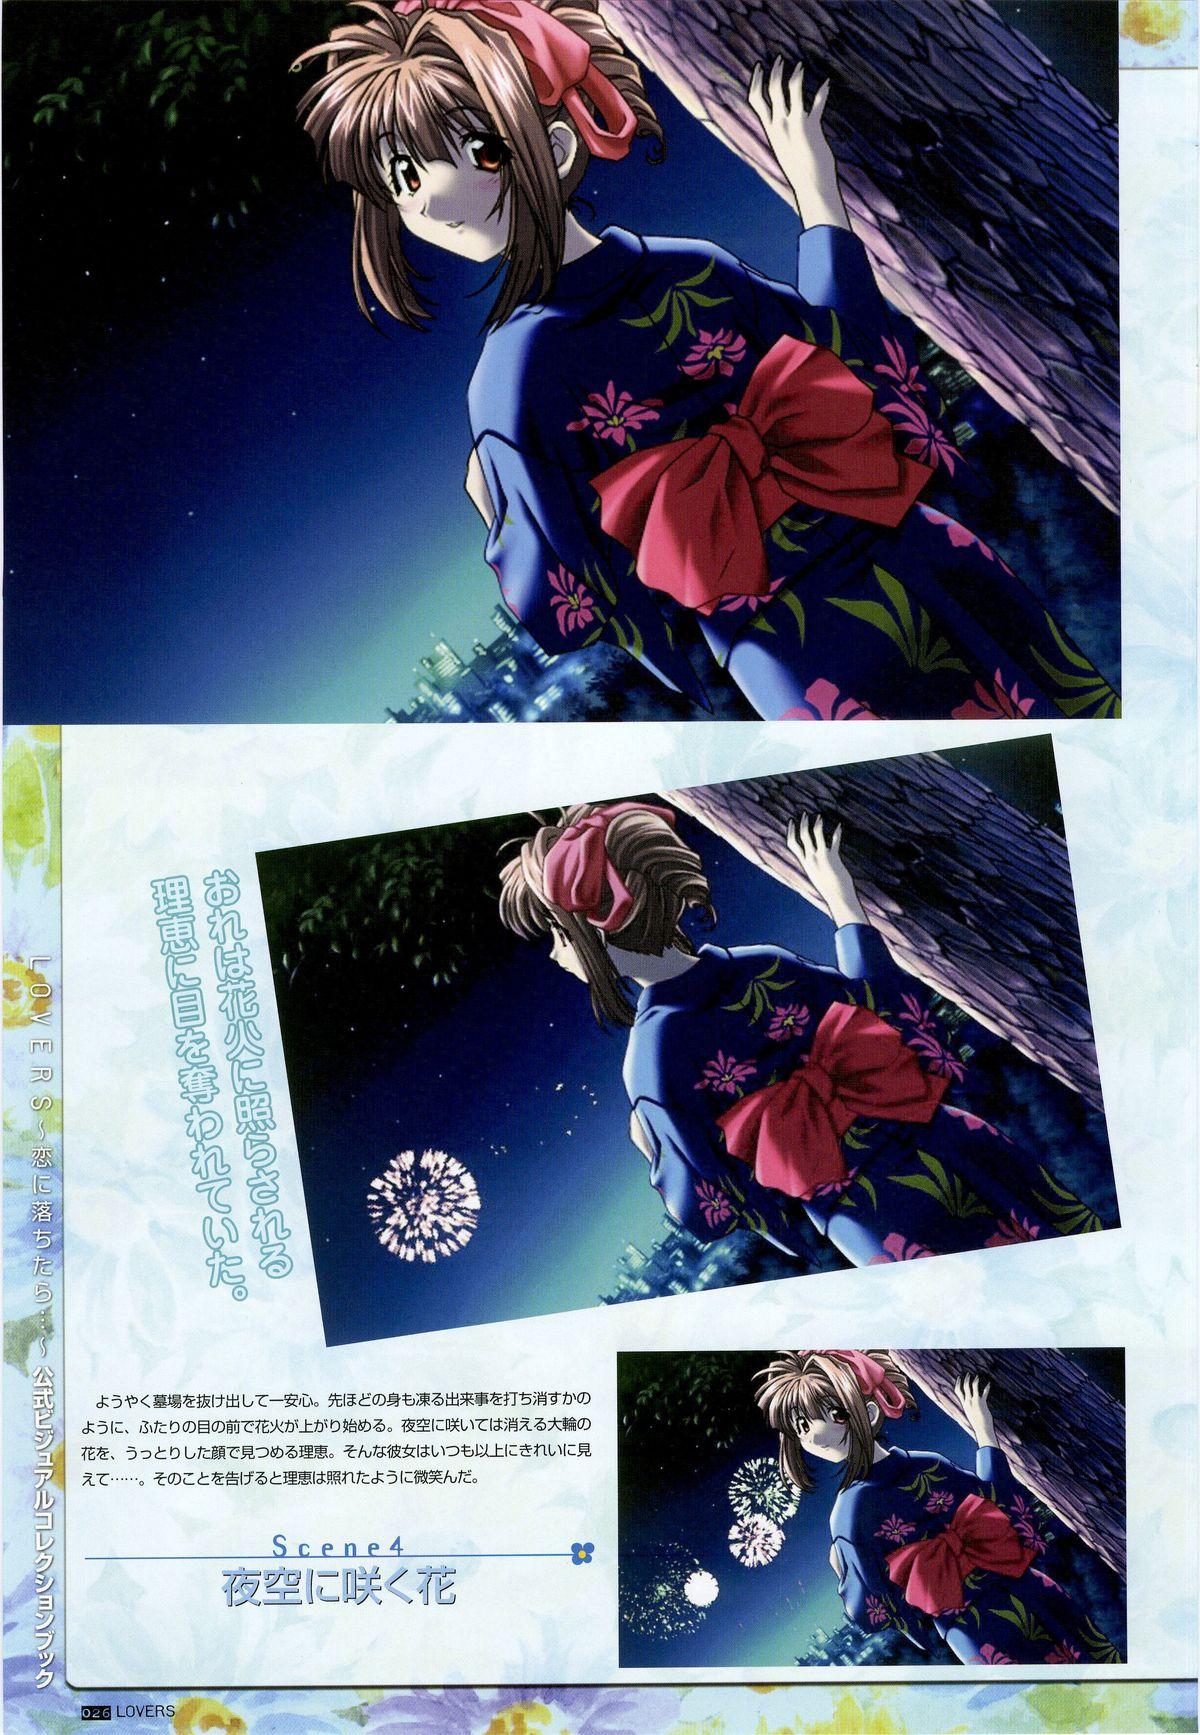 LOVERS ~Koi ni Ochitara...~ Official Visual Collection Book 32